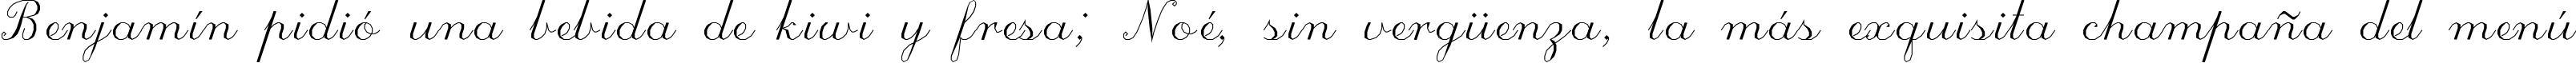 Пример написания шрифтом ScriptC текста на испанском